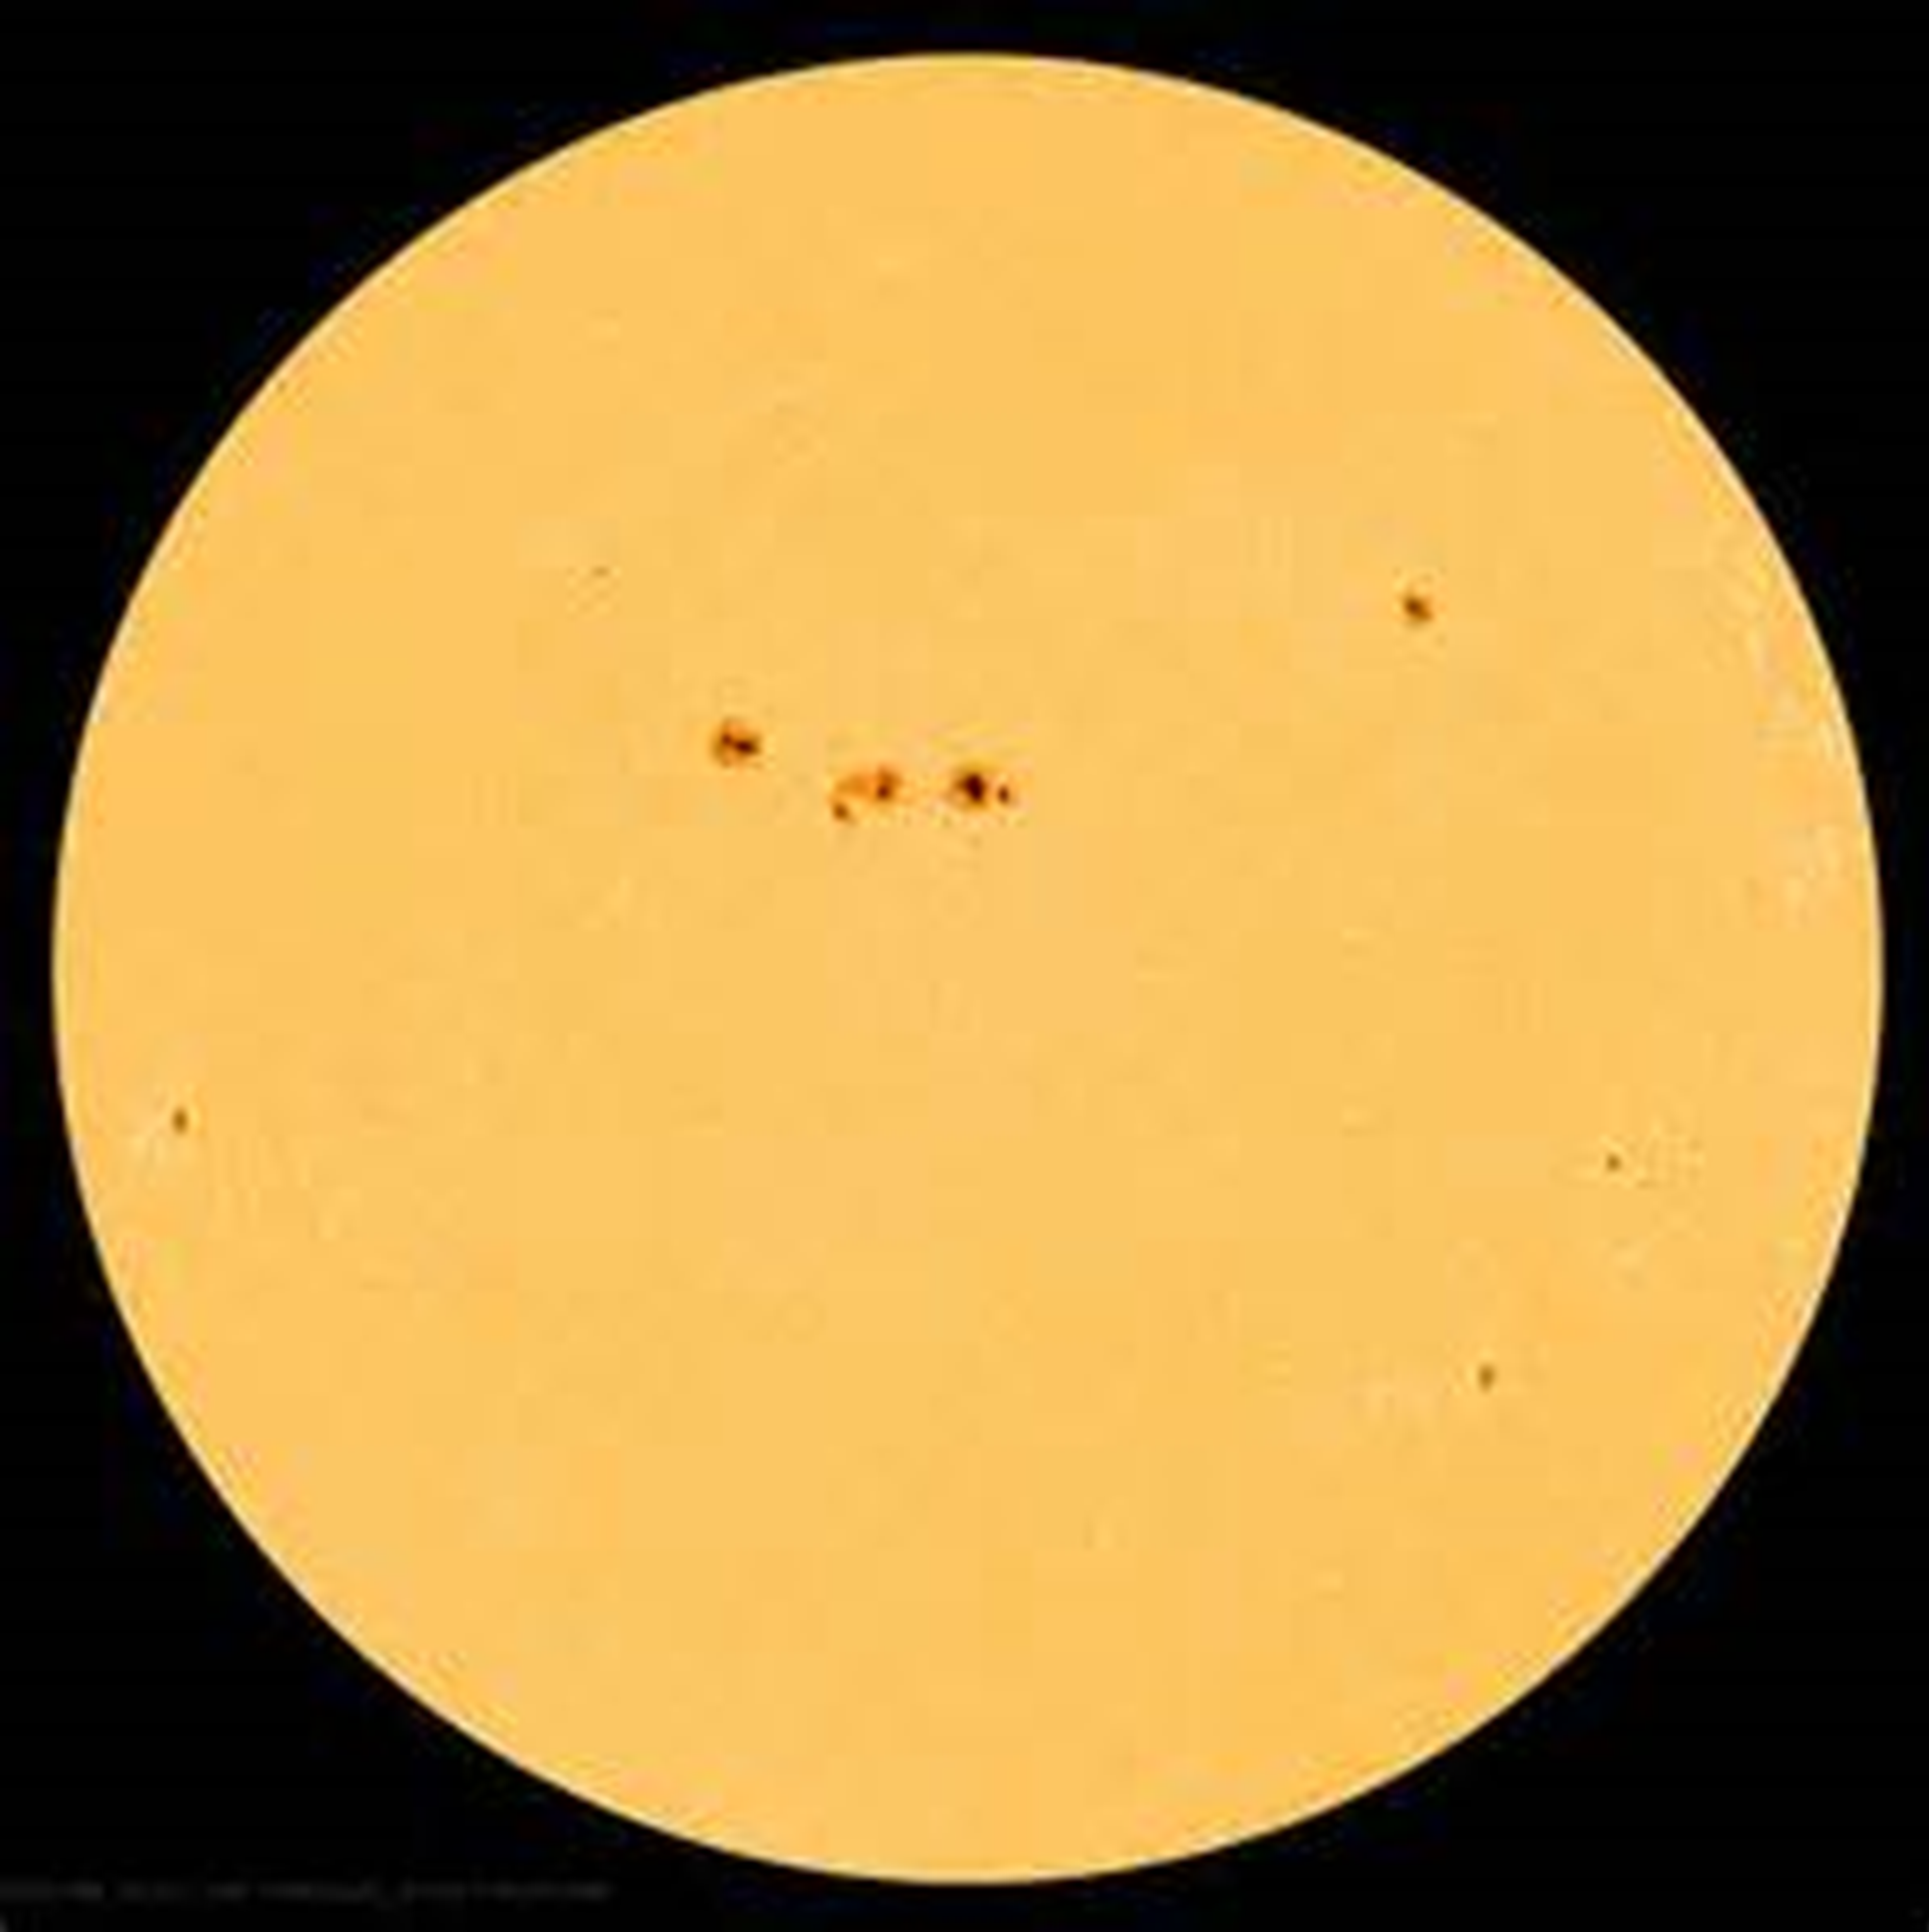 Solar Image courtesy of NASA